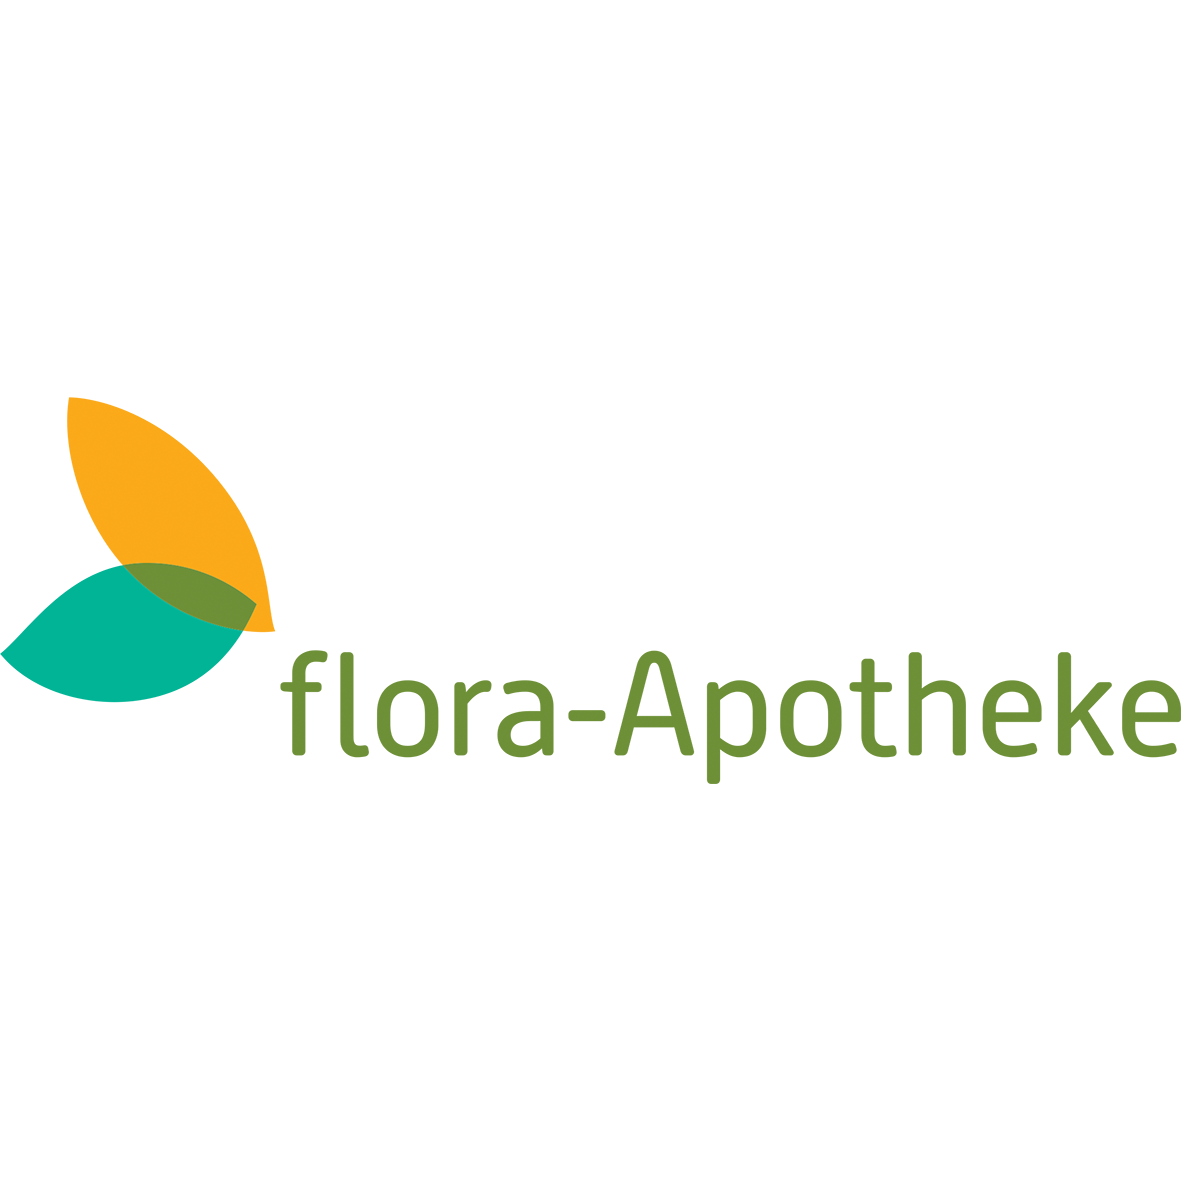 Flora-Apotheke in Münster - Logo